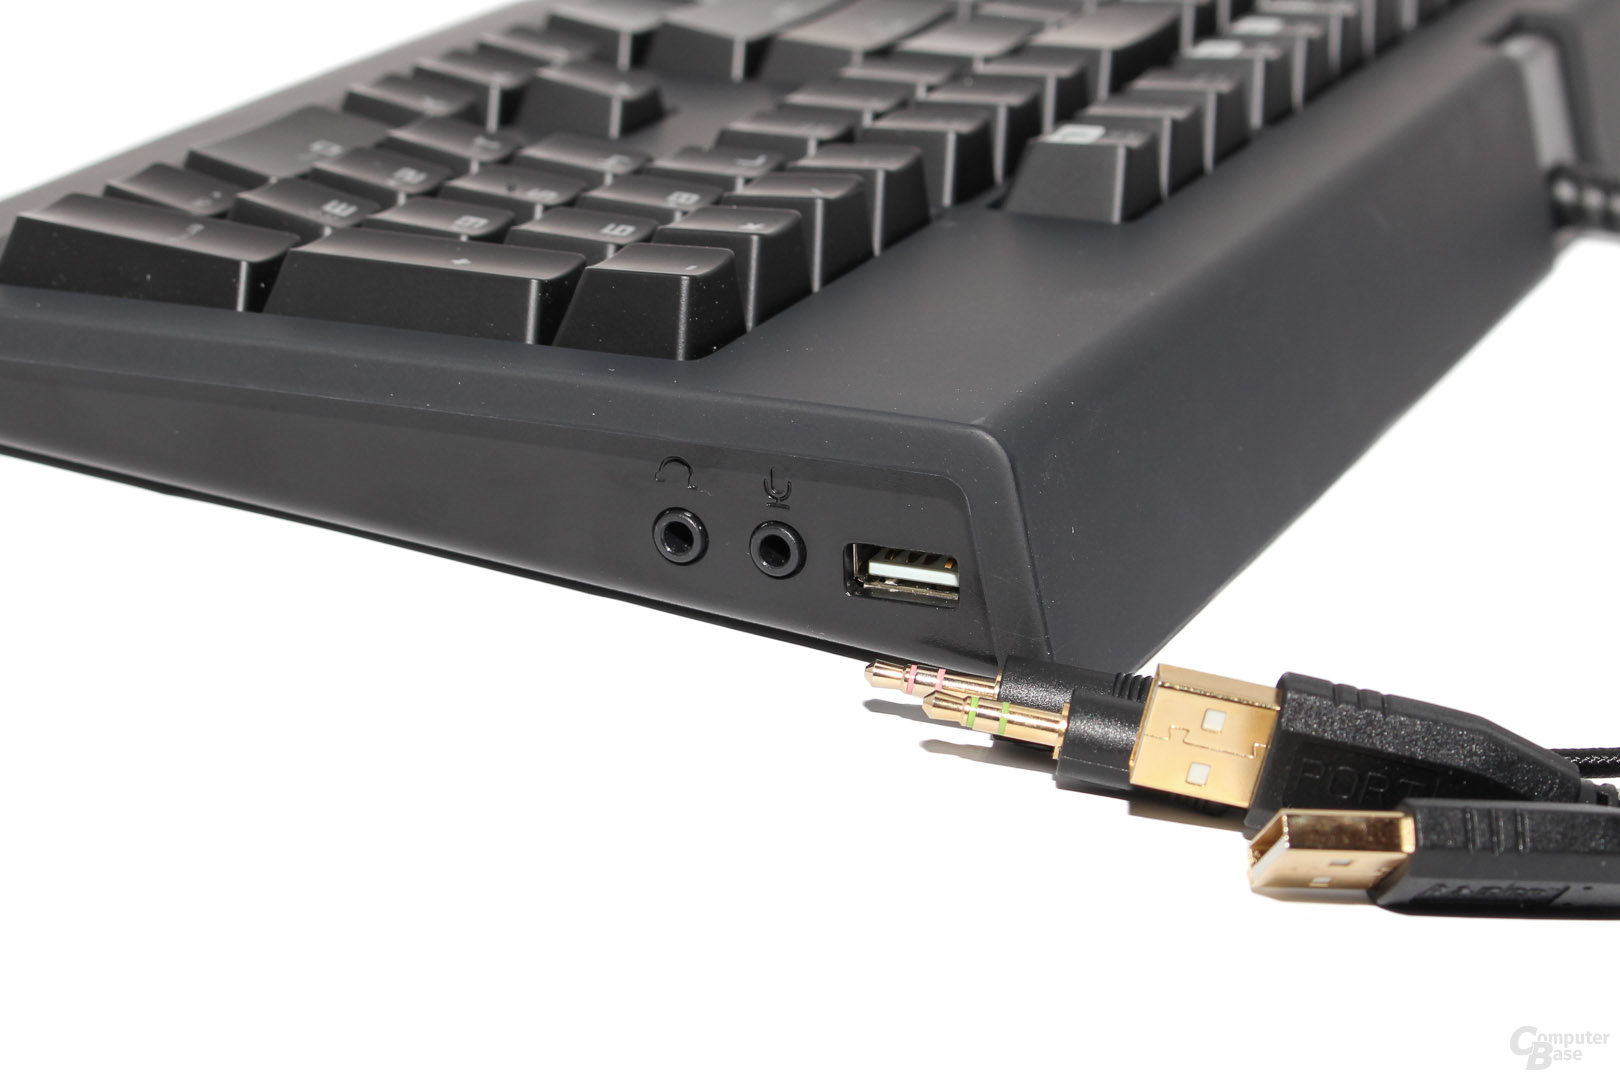 rechtsseitig angebrachter I/O-Hub mit vollwertigem USB-Steckplatz